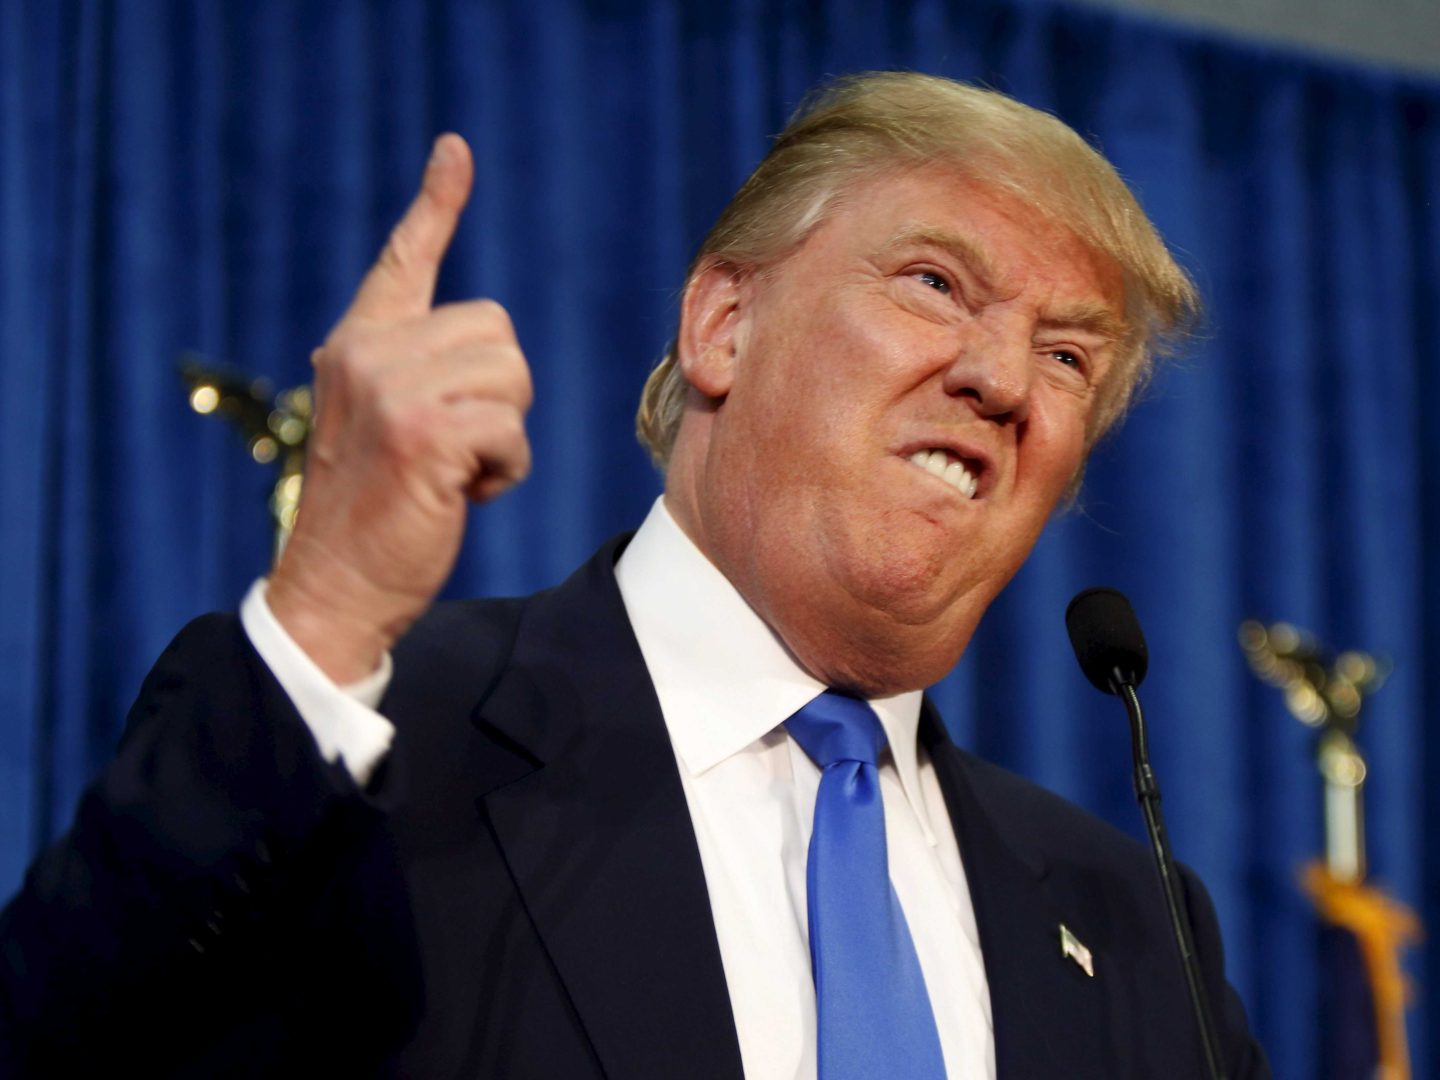 Angry Donald Trump دونالد ترامب غاضب